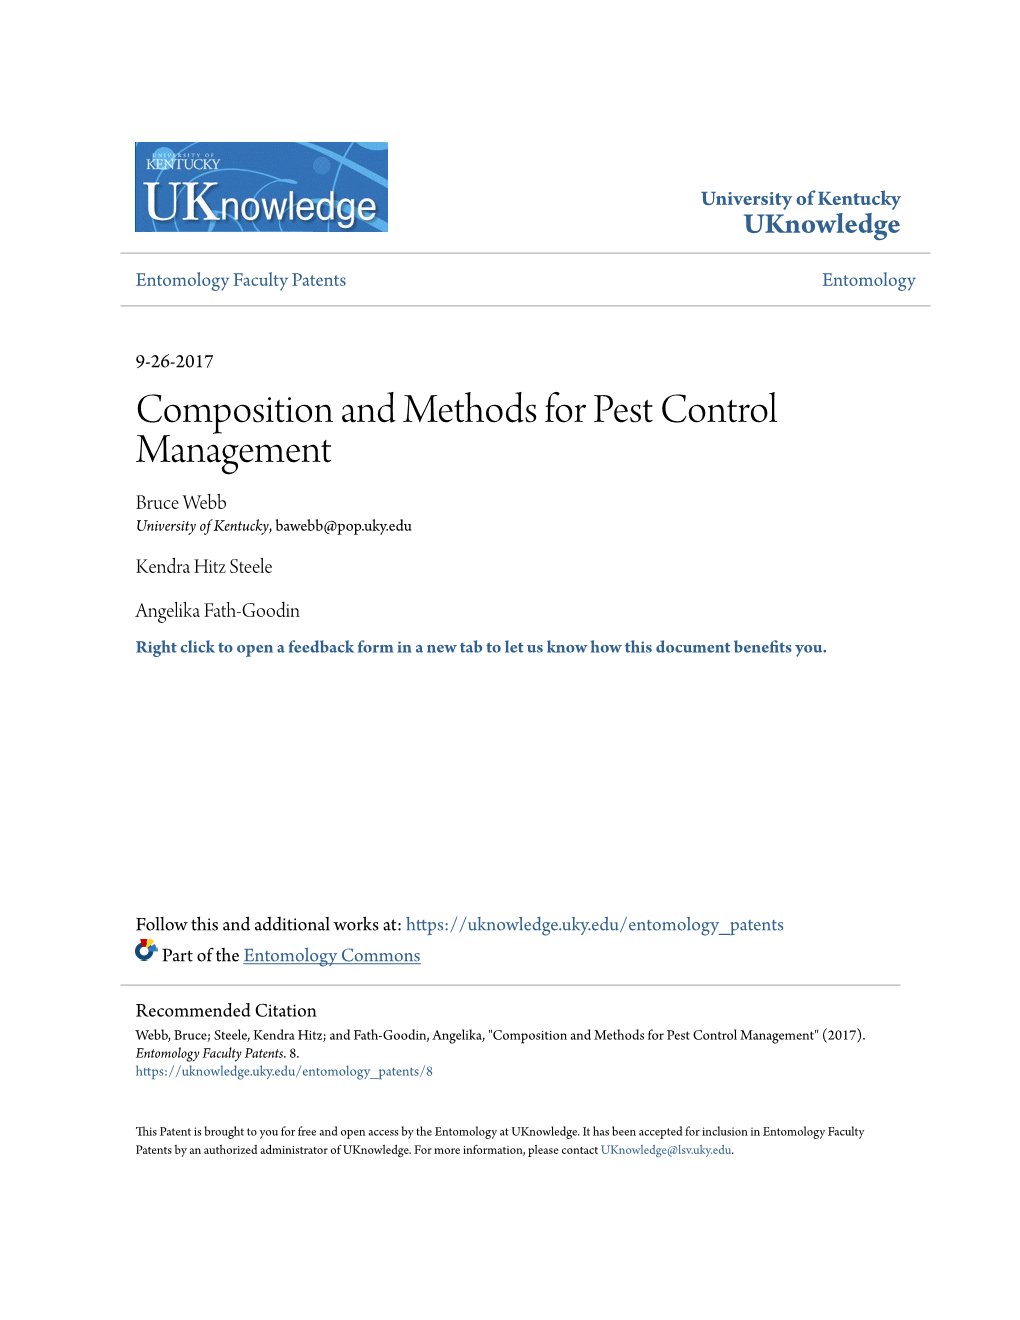 Composition and Methods for Pest Control Management Bruce Webb University of Kentucky, Bawebb@Pop.Uky.Edu